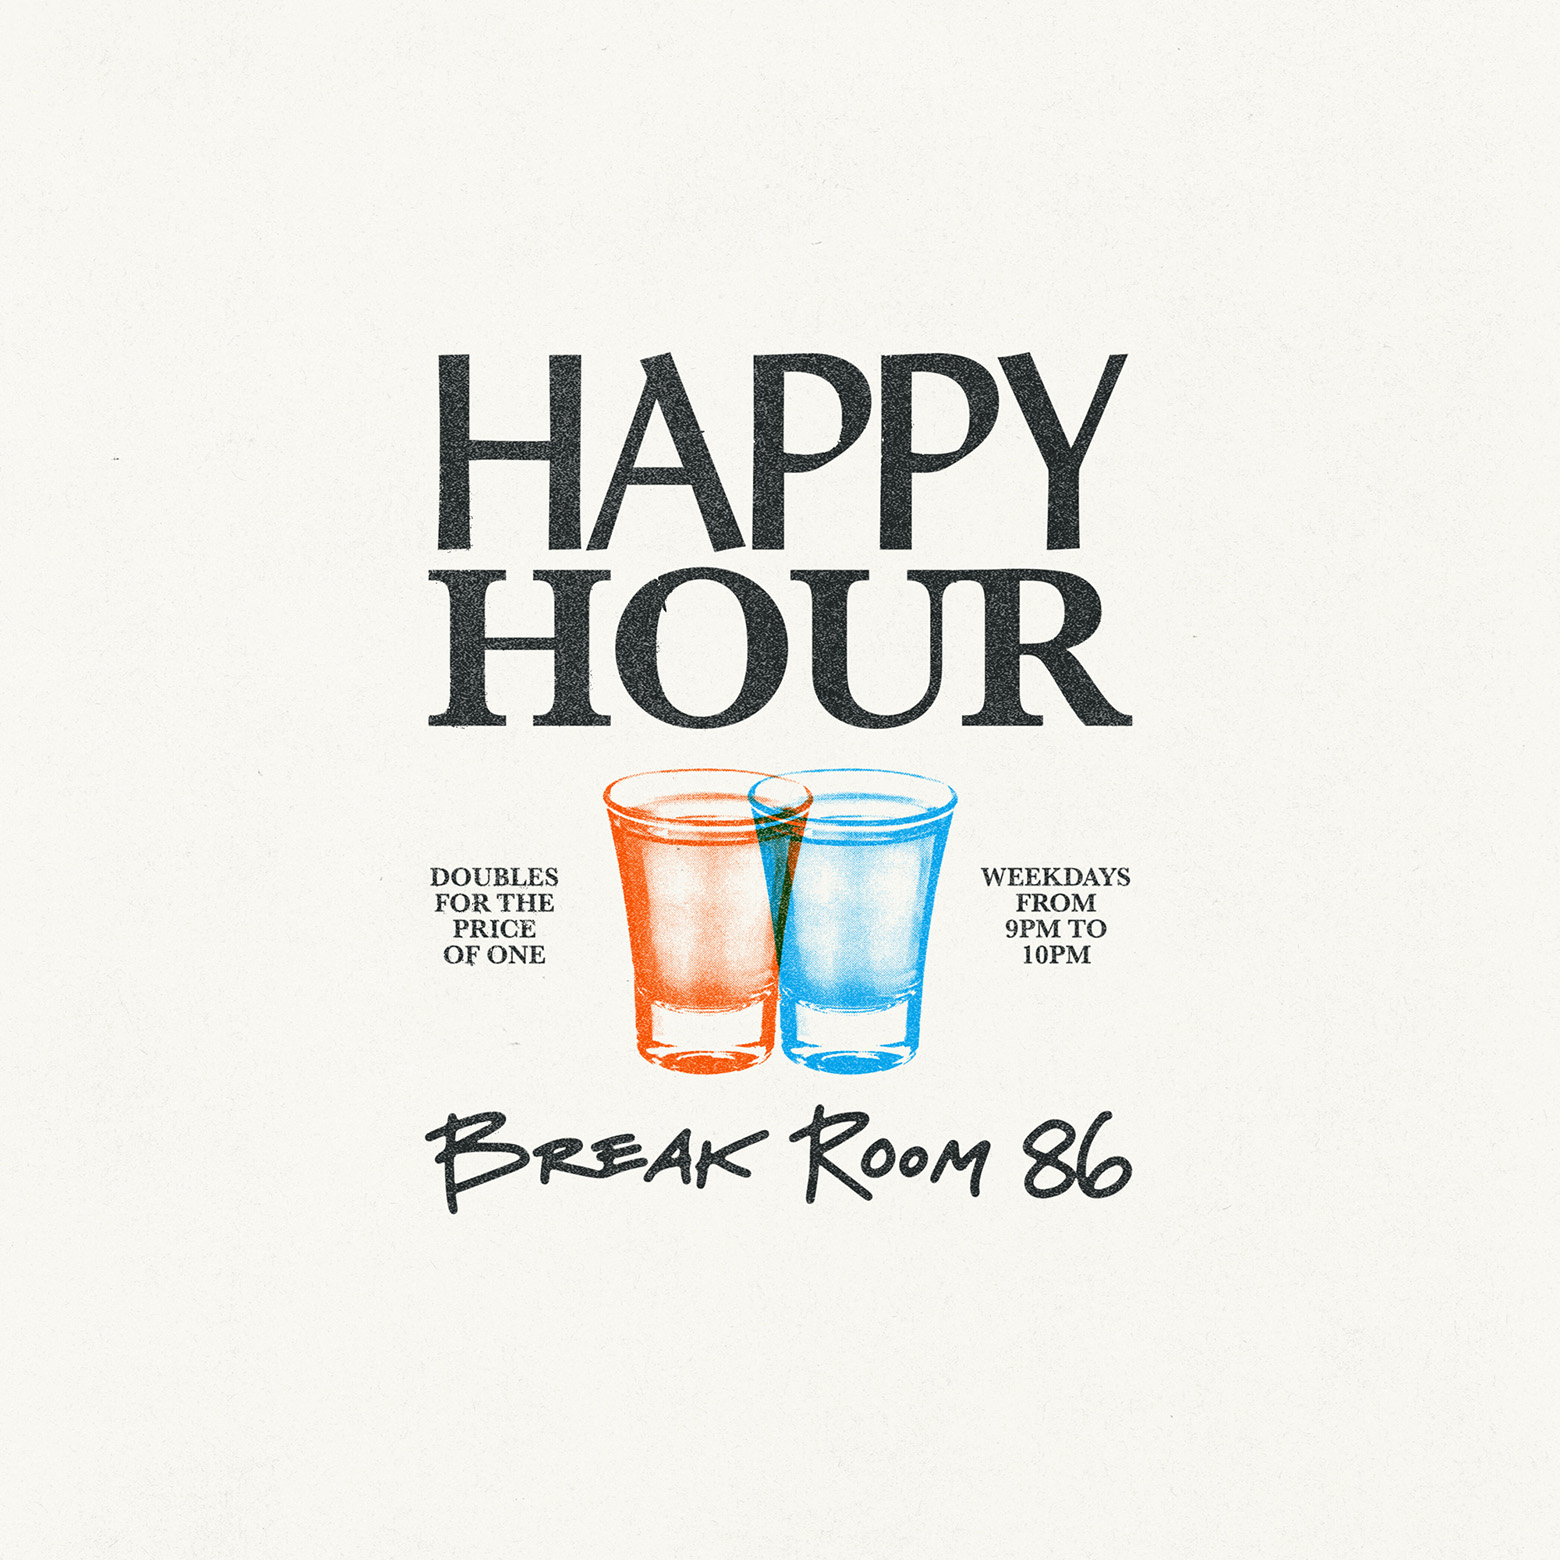 Happy Hour at Break Room 86